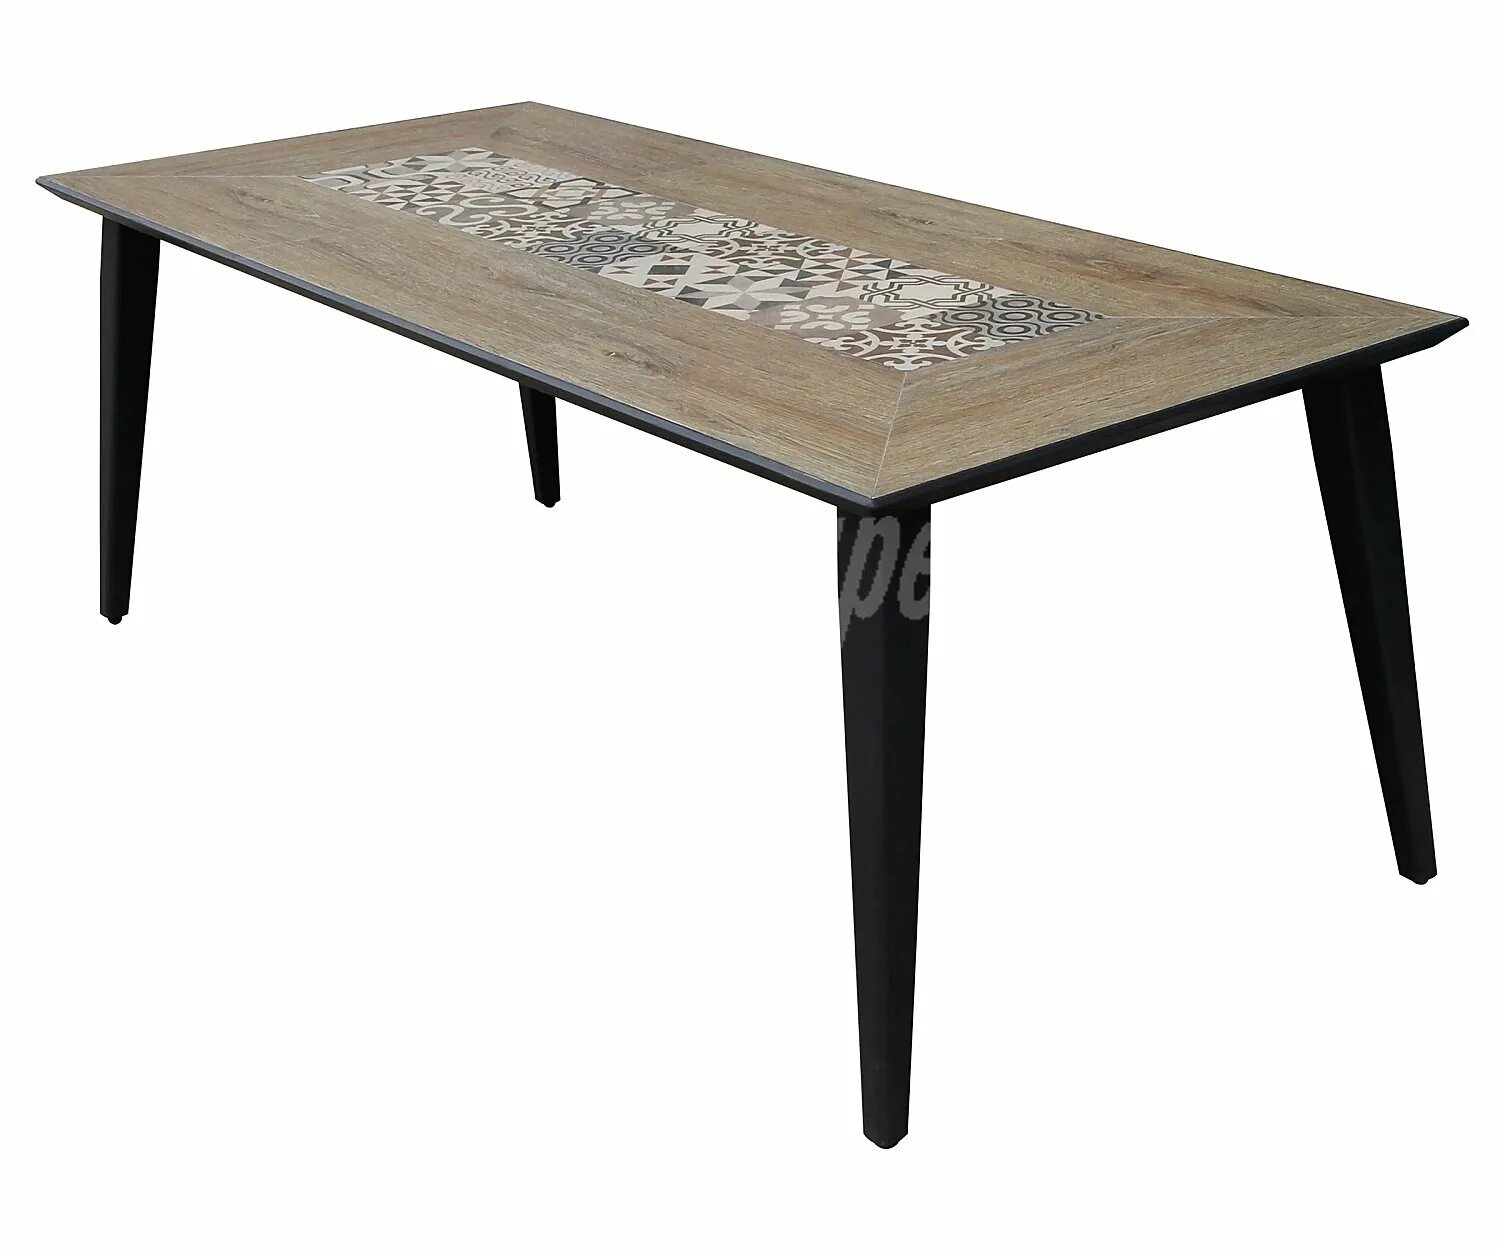 Кухонные столы керамические. Стол керамический Eclipse. Стол садовый g005t. Садовый стол с керамической столешницей. Стол с керамическим покрытием.